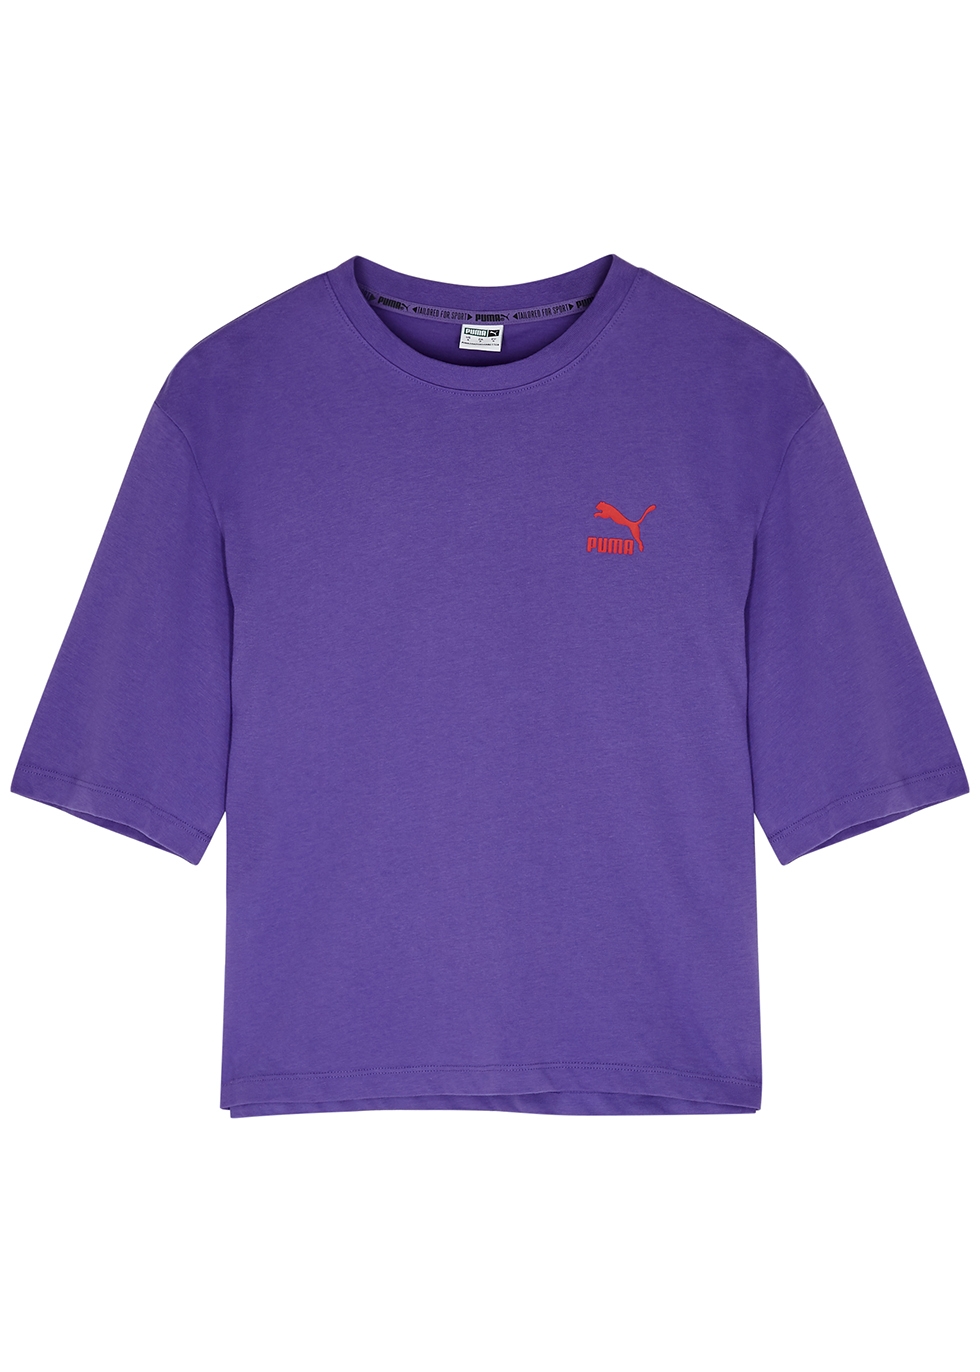 tee shirt puma violet